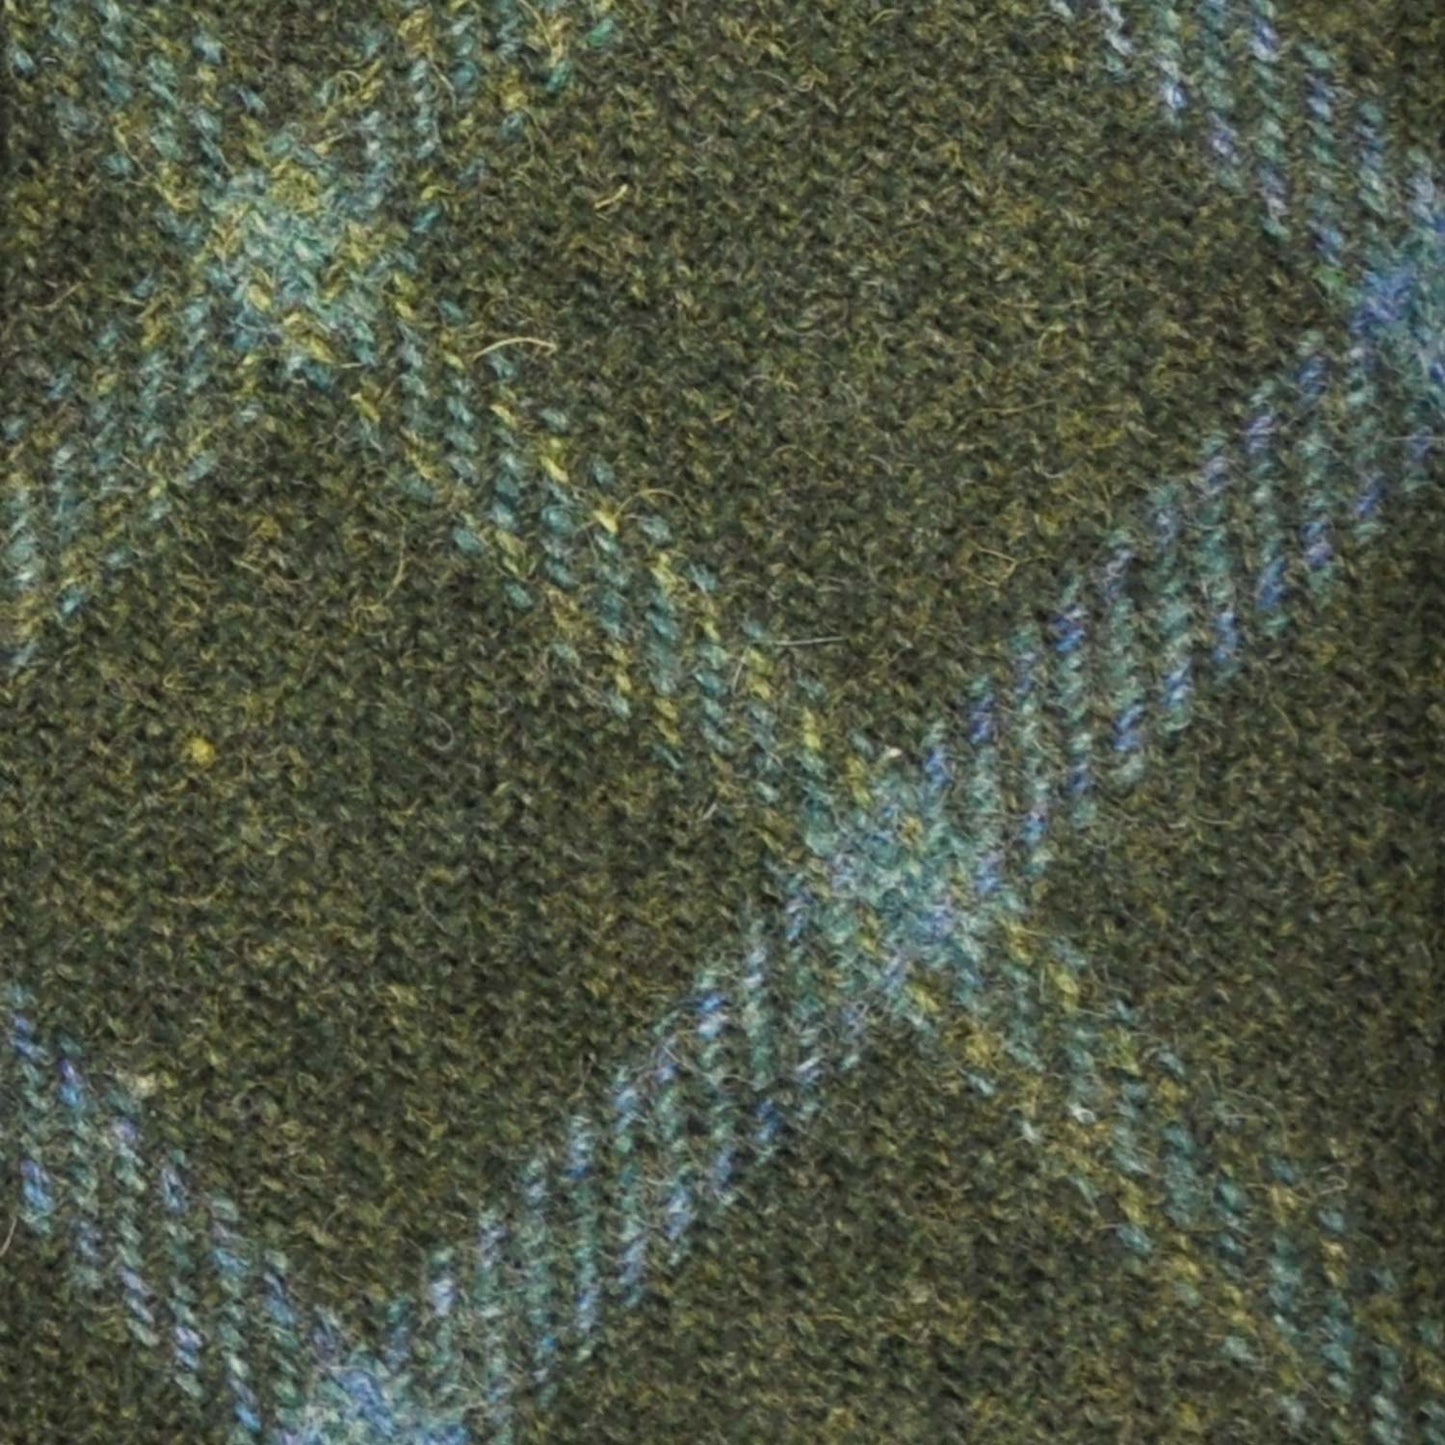 F.Marino Tweed Tie 3 Folds Windowpane Rifle Green-Wools Boutique Uomo